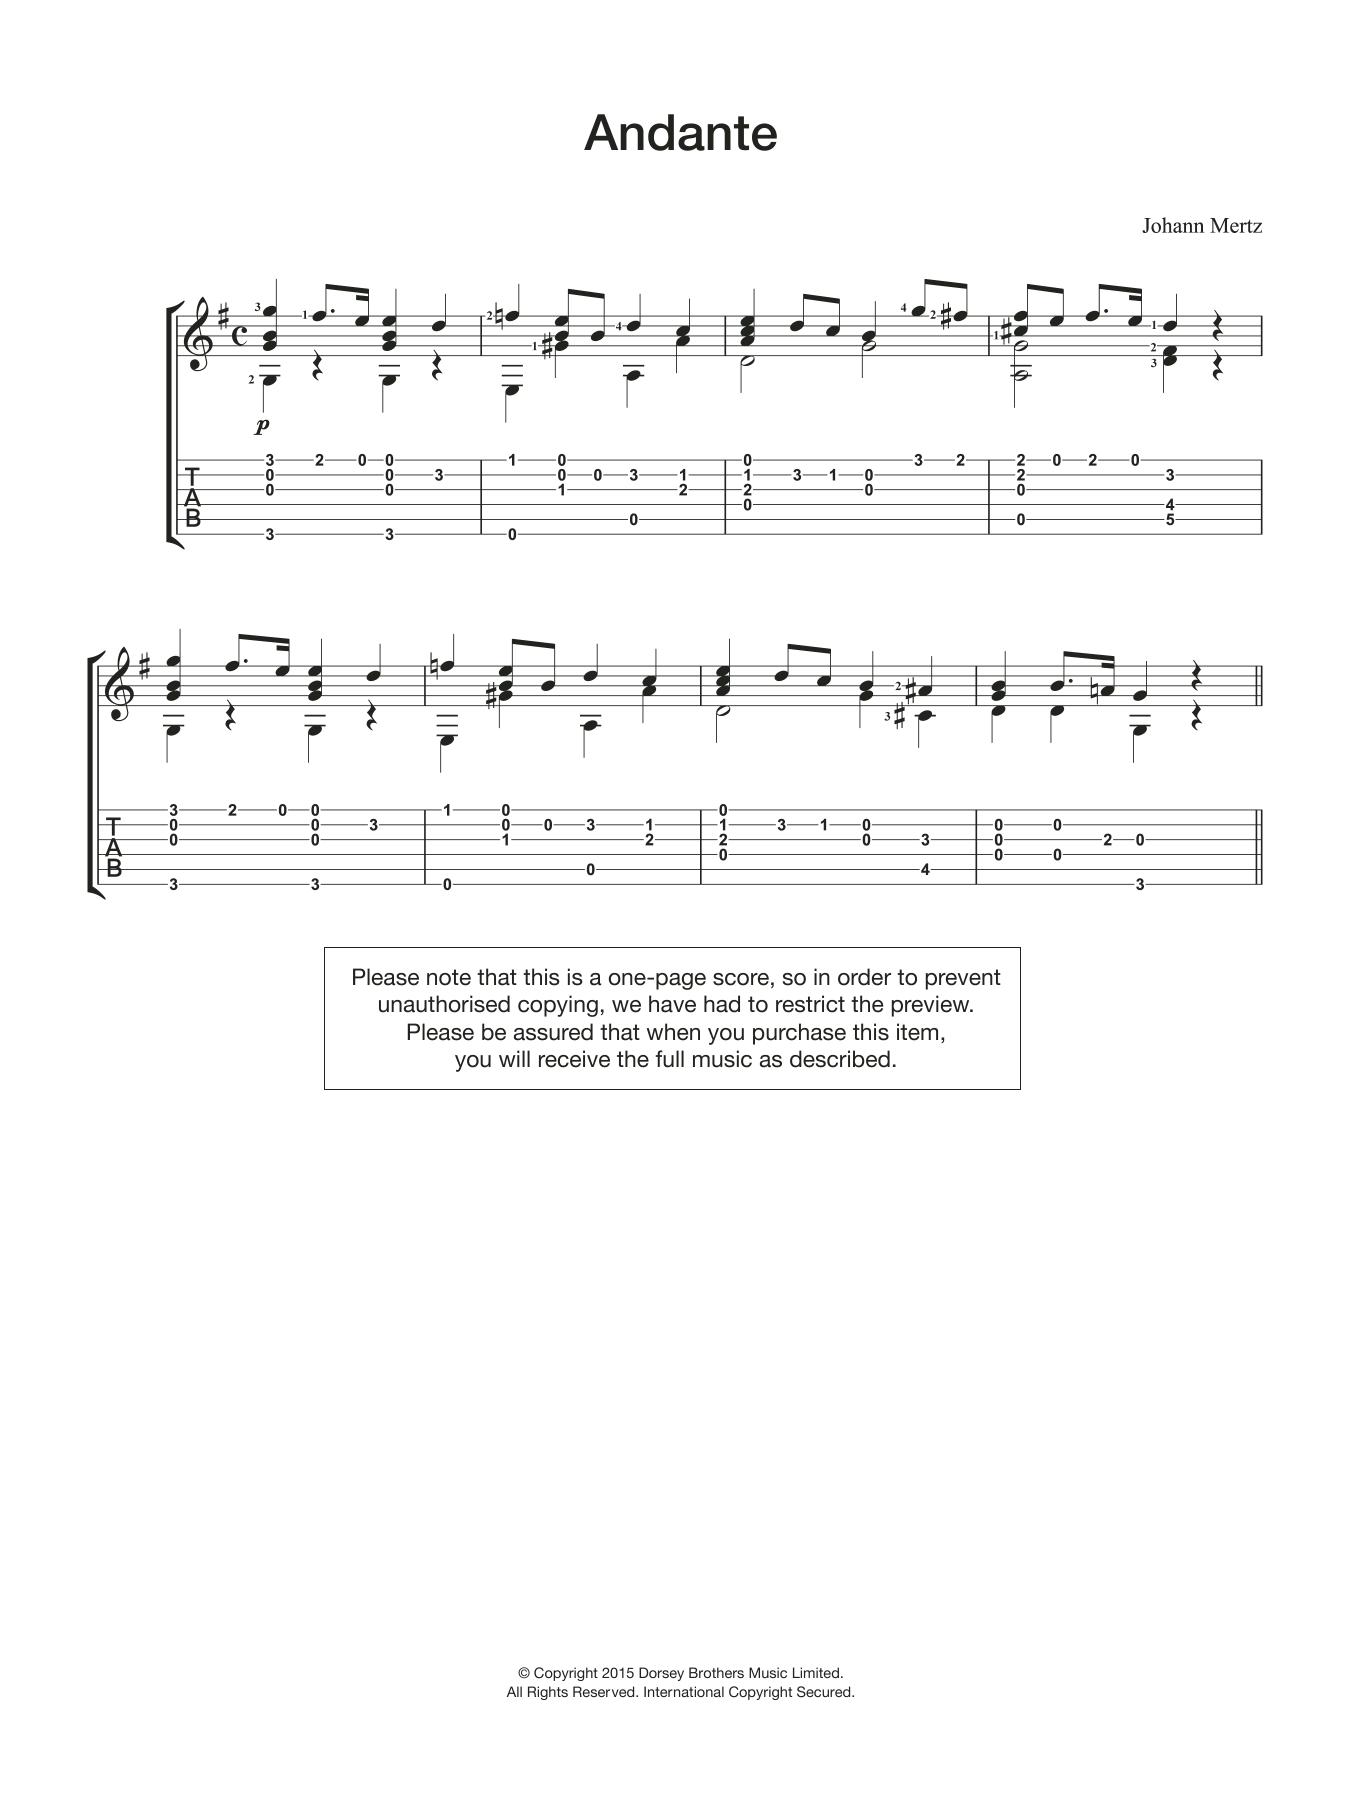 Download Johann Kaspar Mertz Andante Sheet Music and learn how to play Guitar PDF digital score in minutes